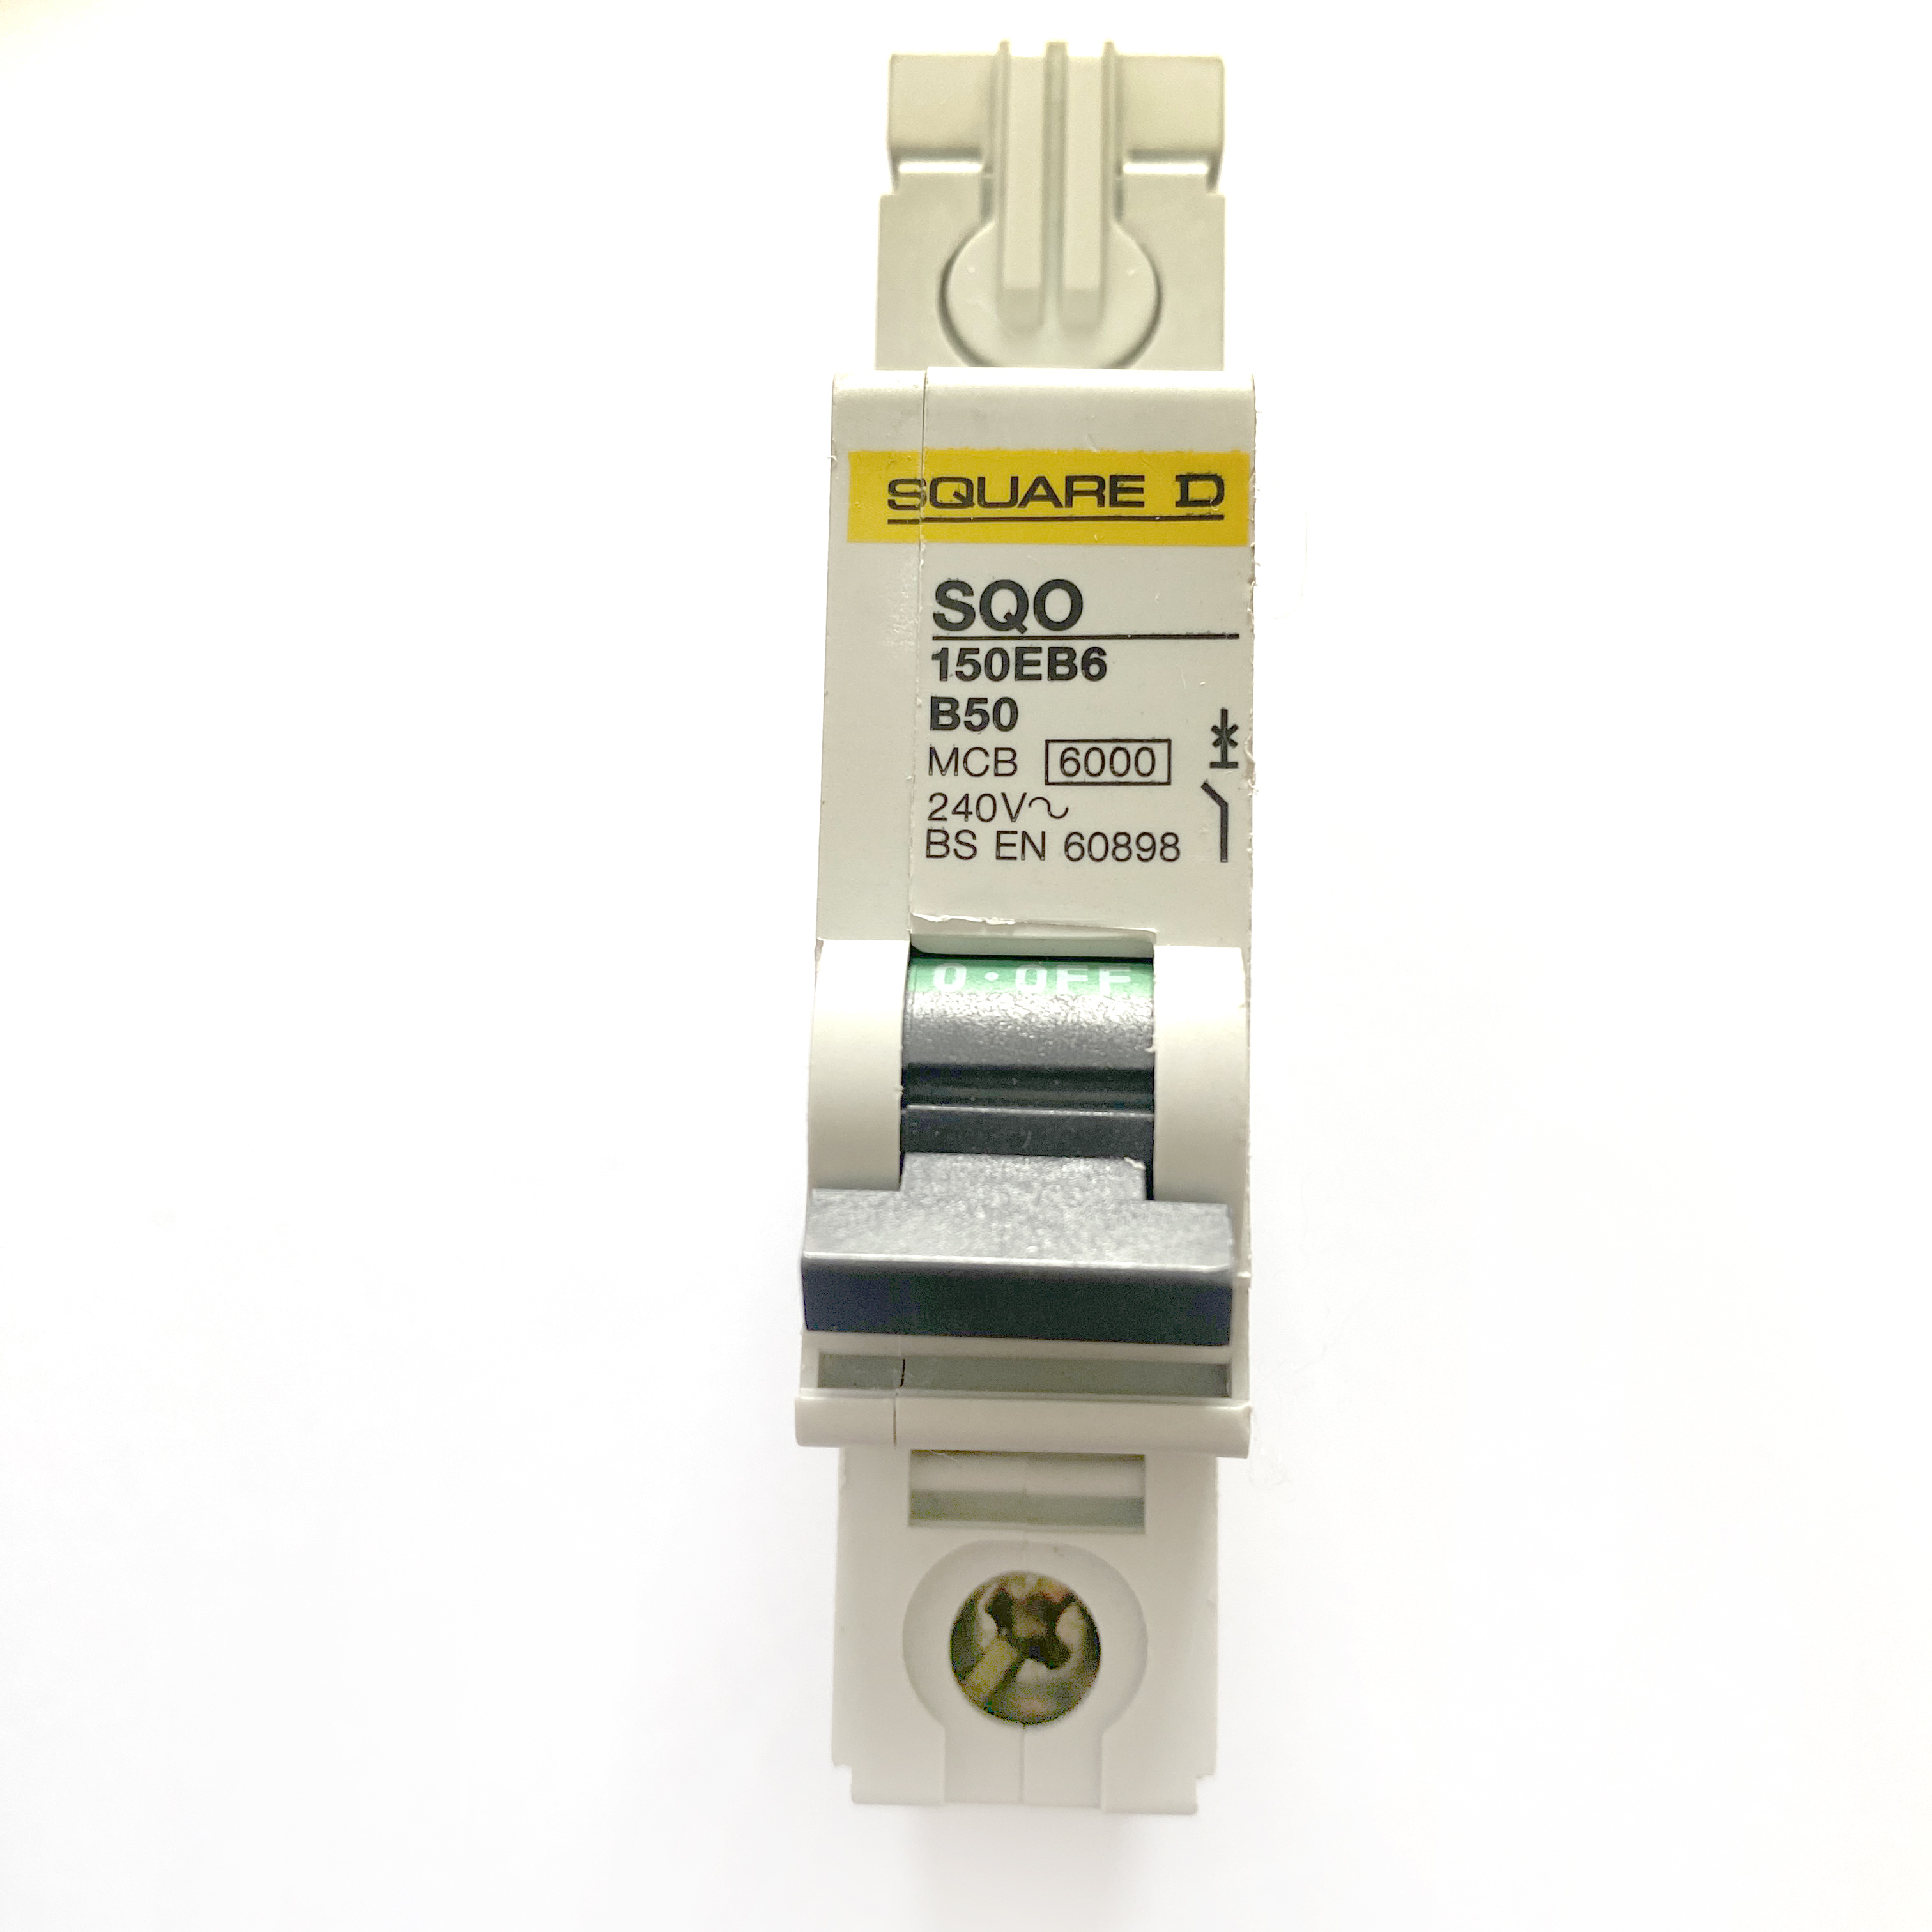 Square D SQO 150EB6 B50 50A 50 Amp MCB Circuit Breaker Type B